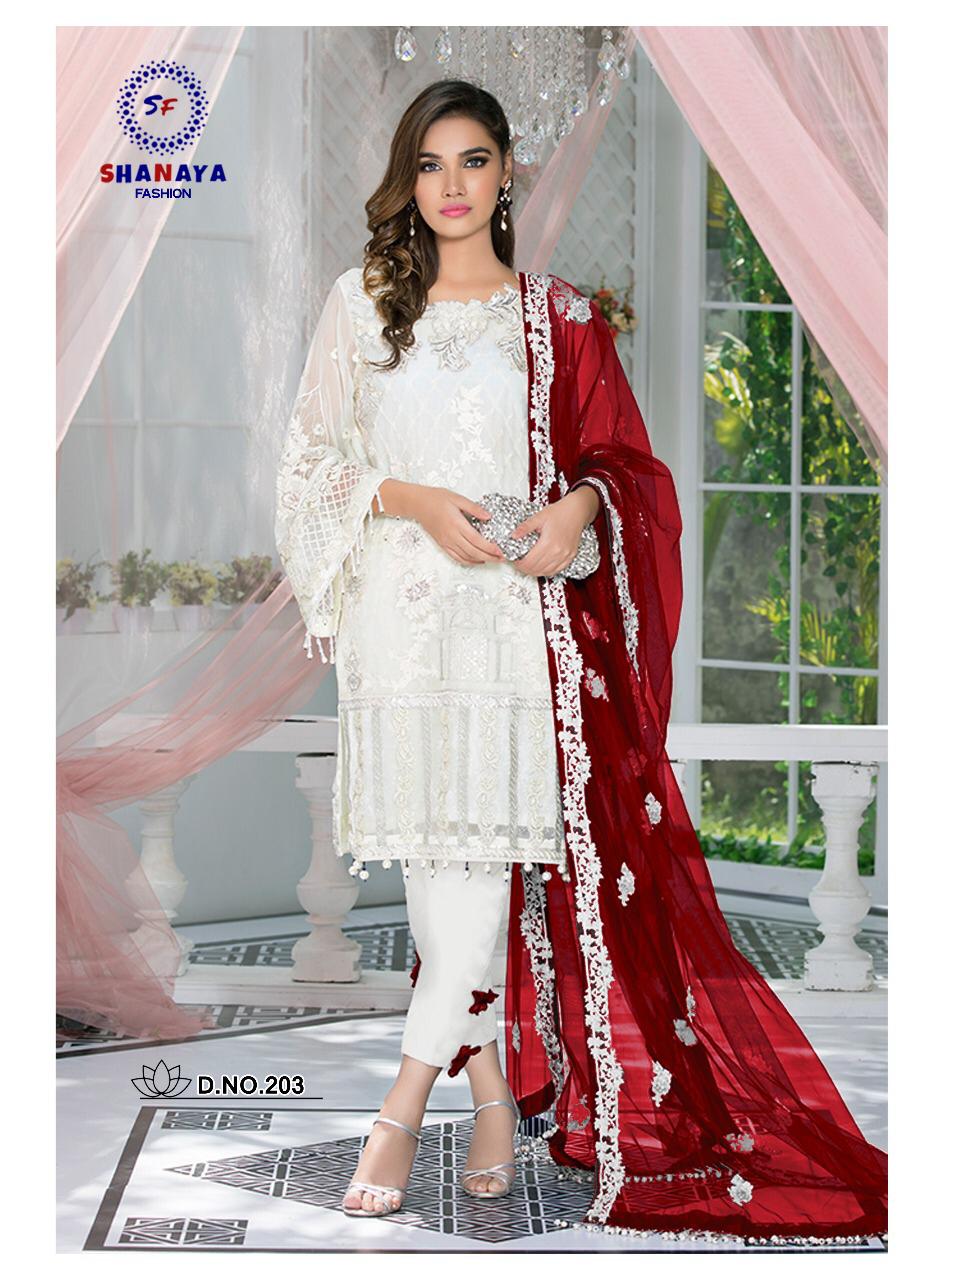 SHANAYA fashion rose classic blockbuster party wear stylish salwar kameez concept